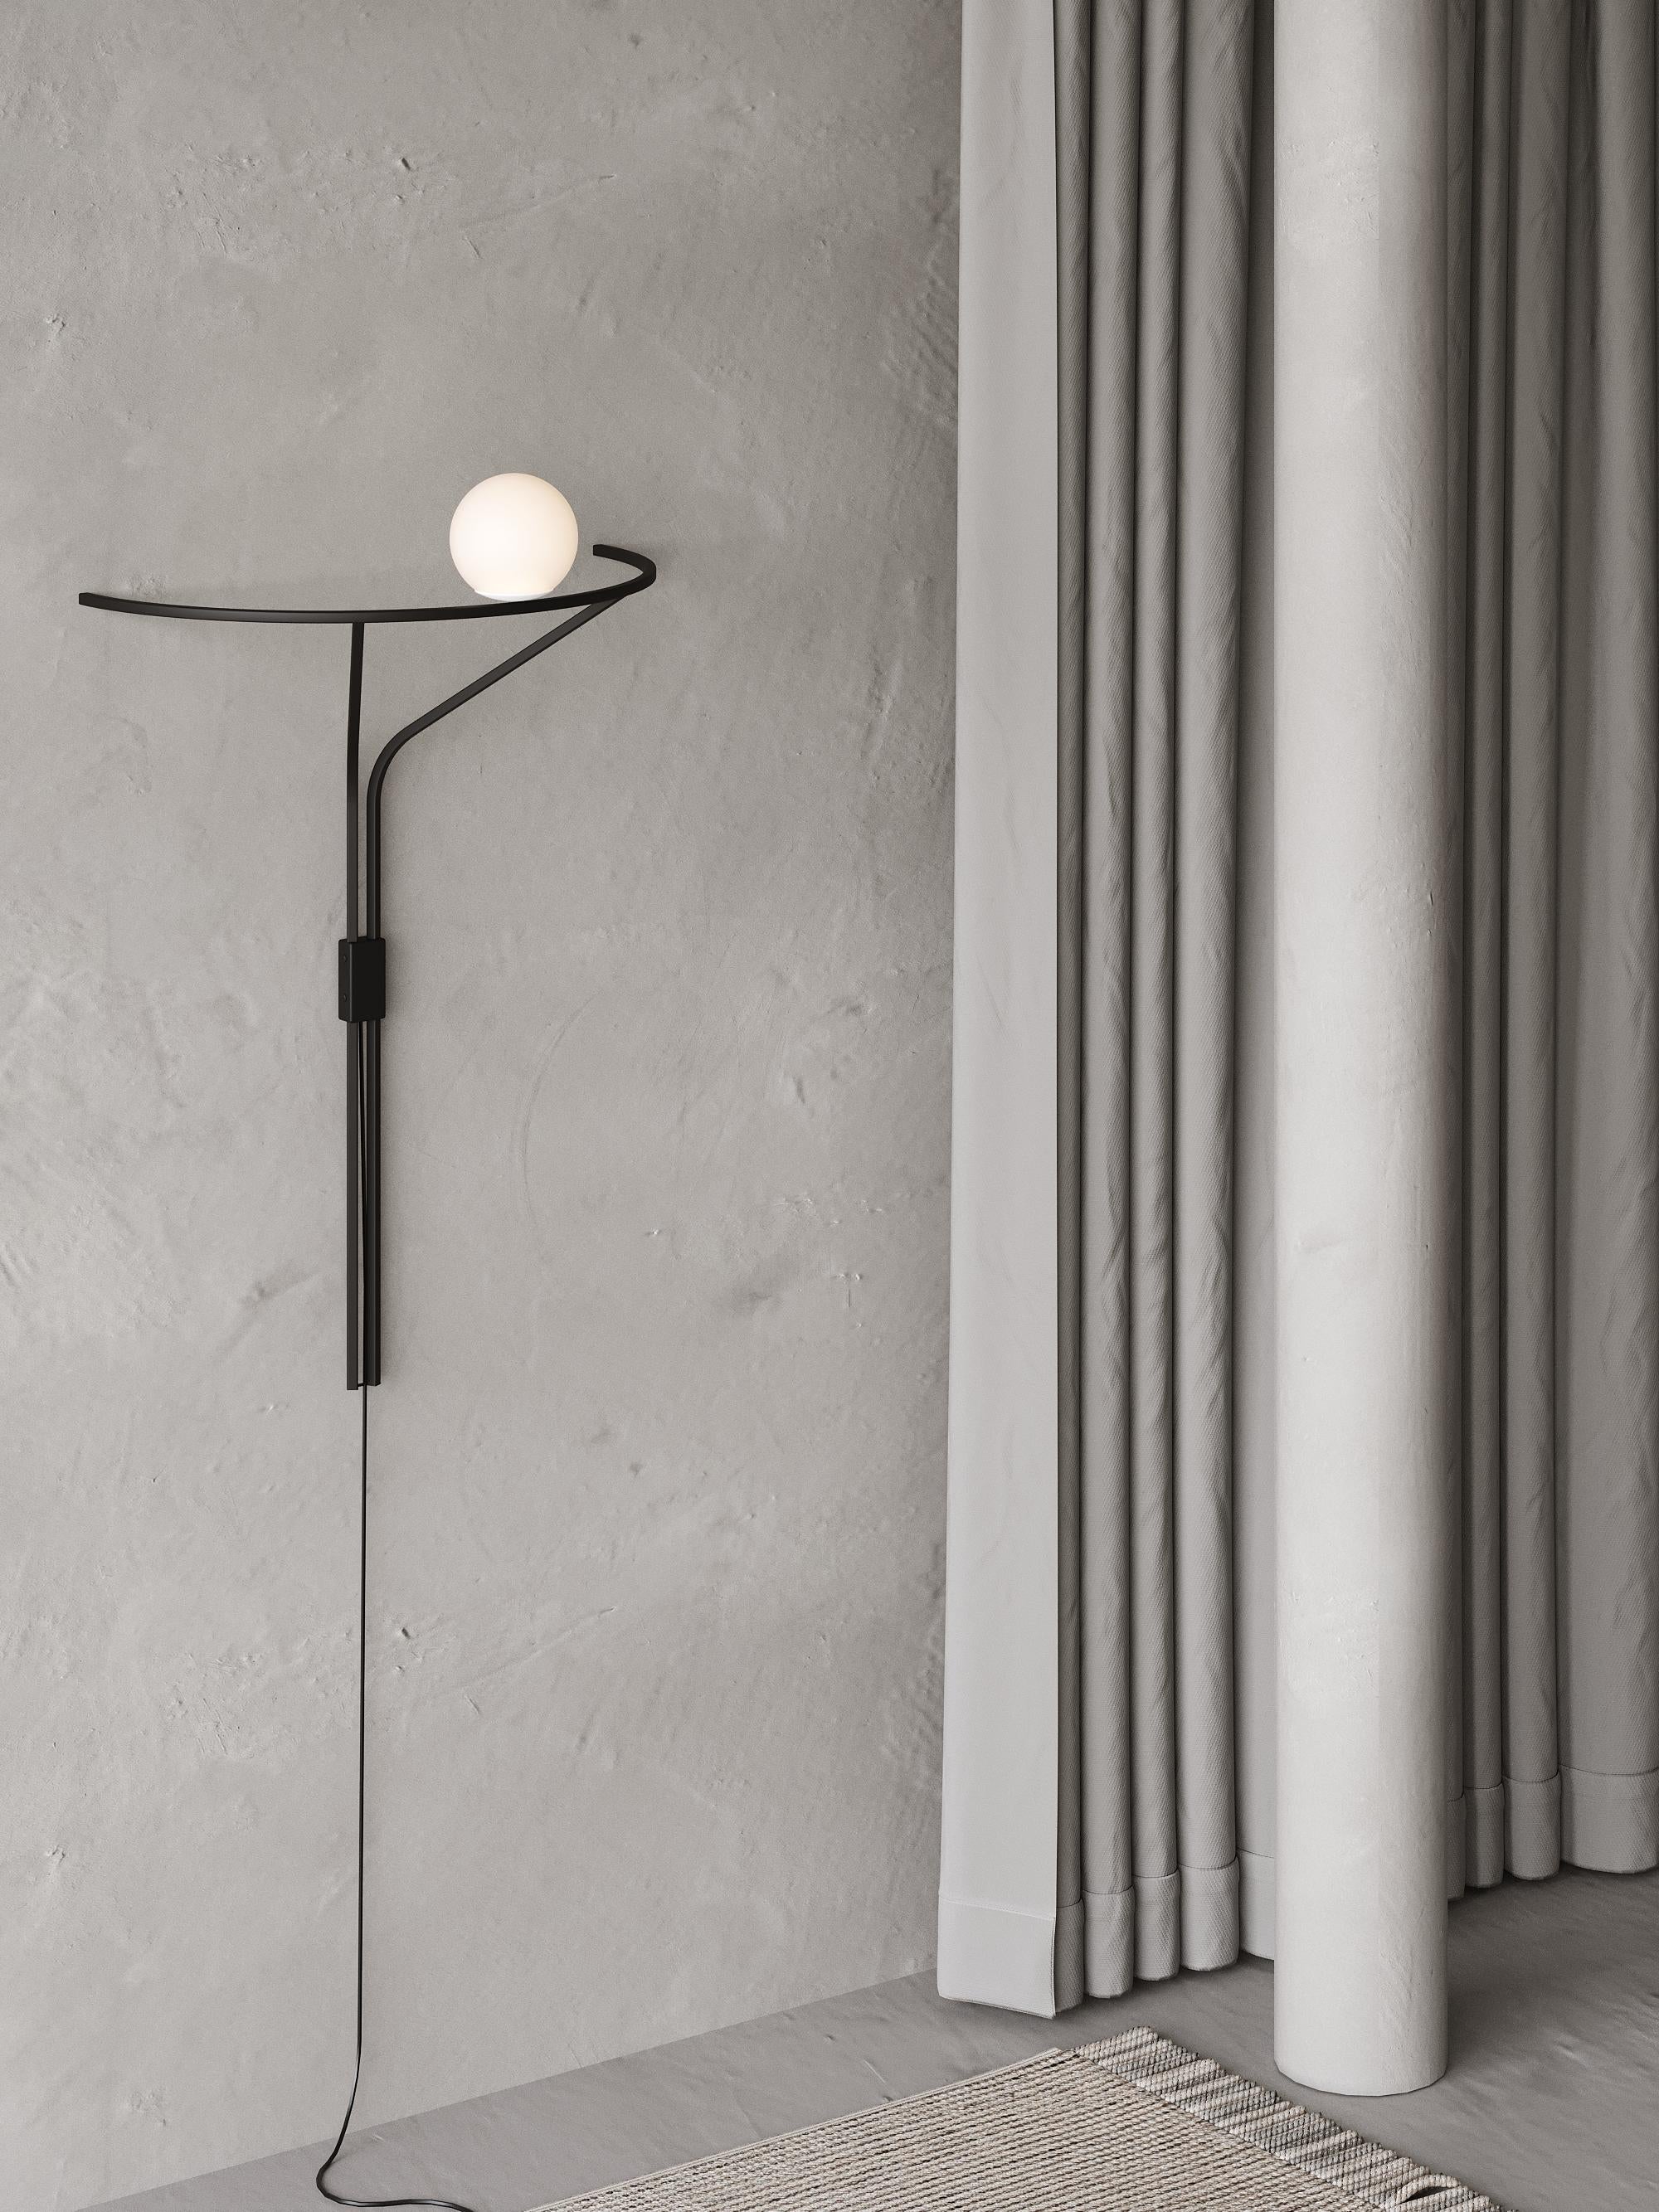 Lampe murale contemporaine minimaliste 